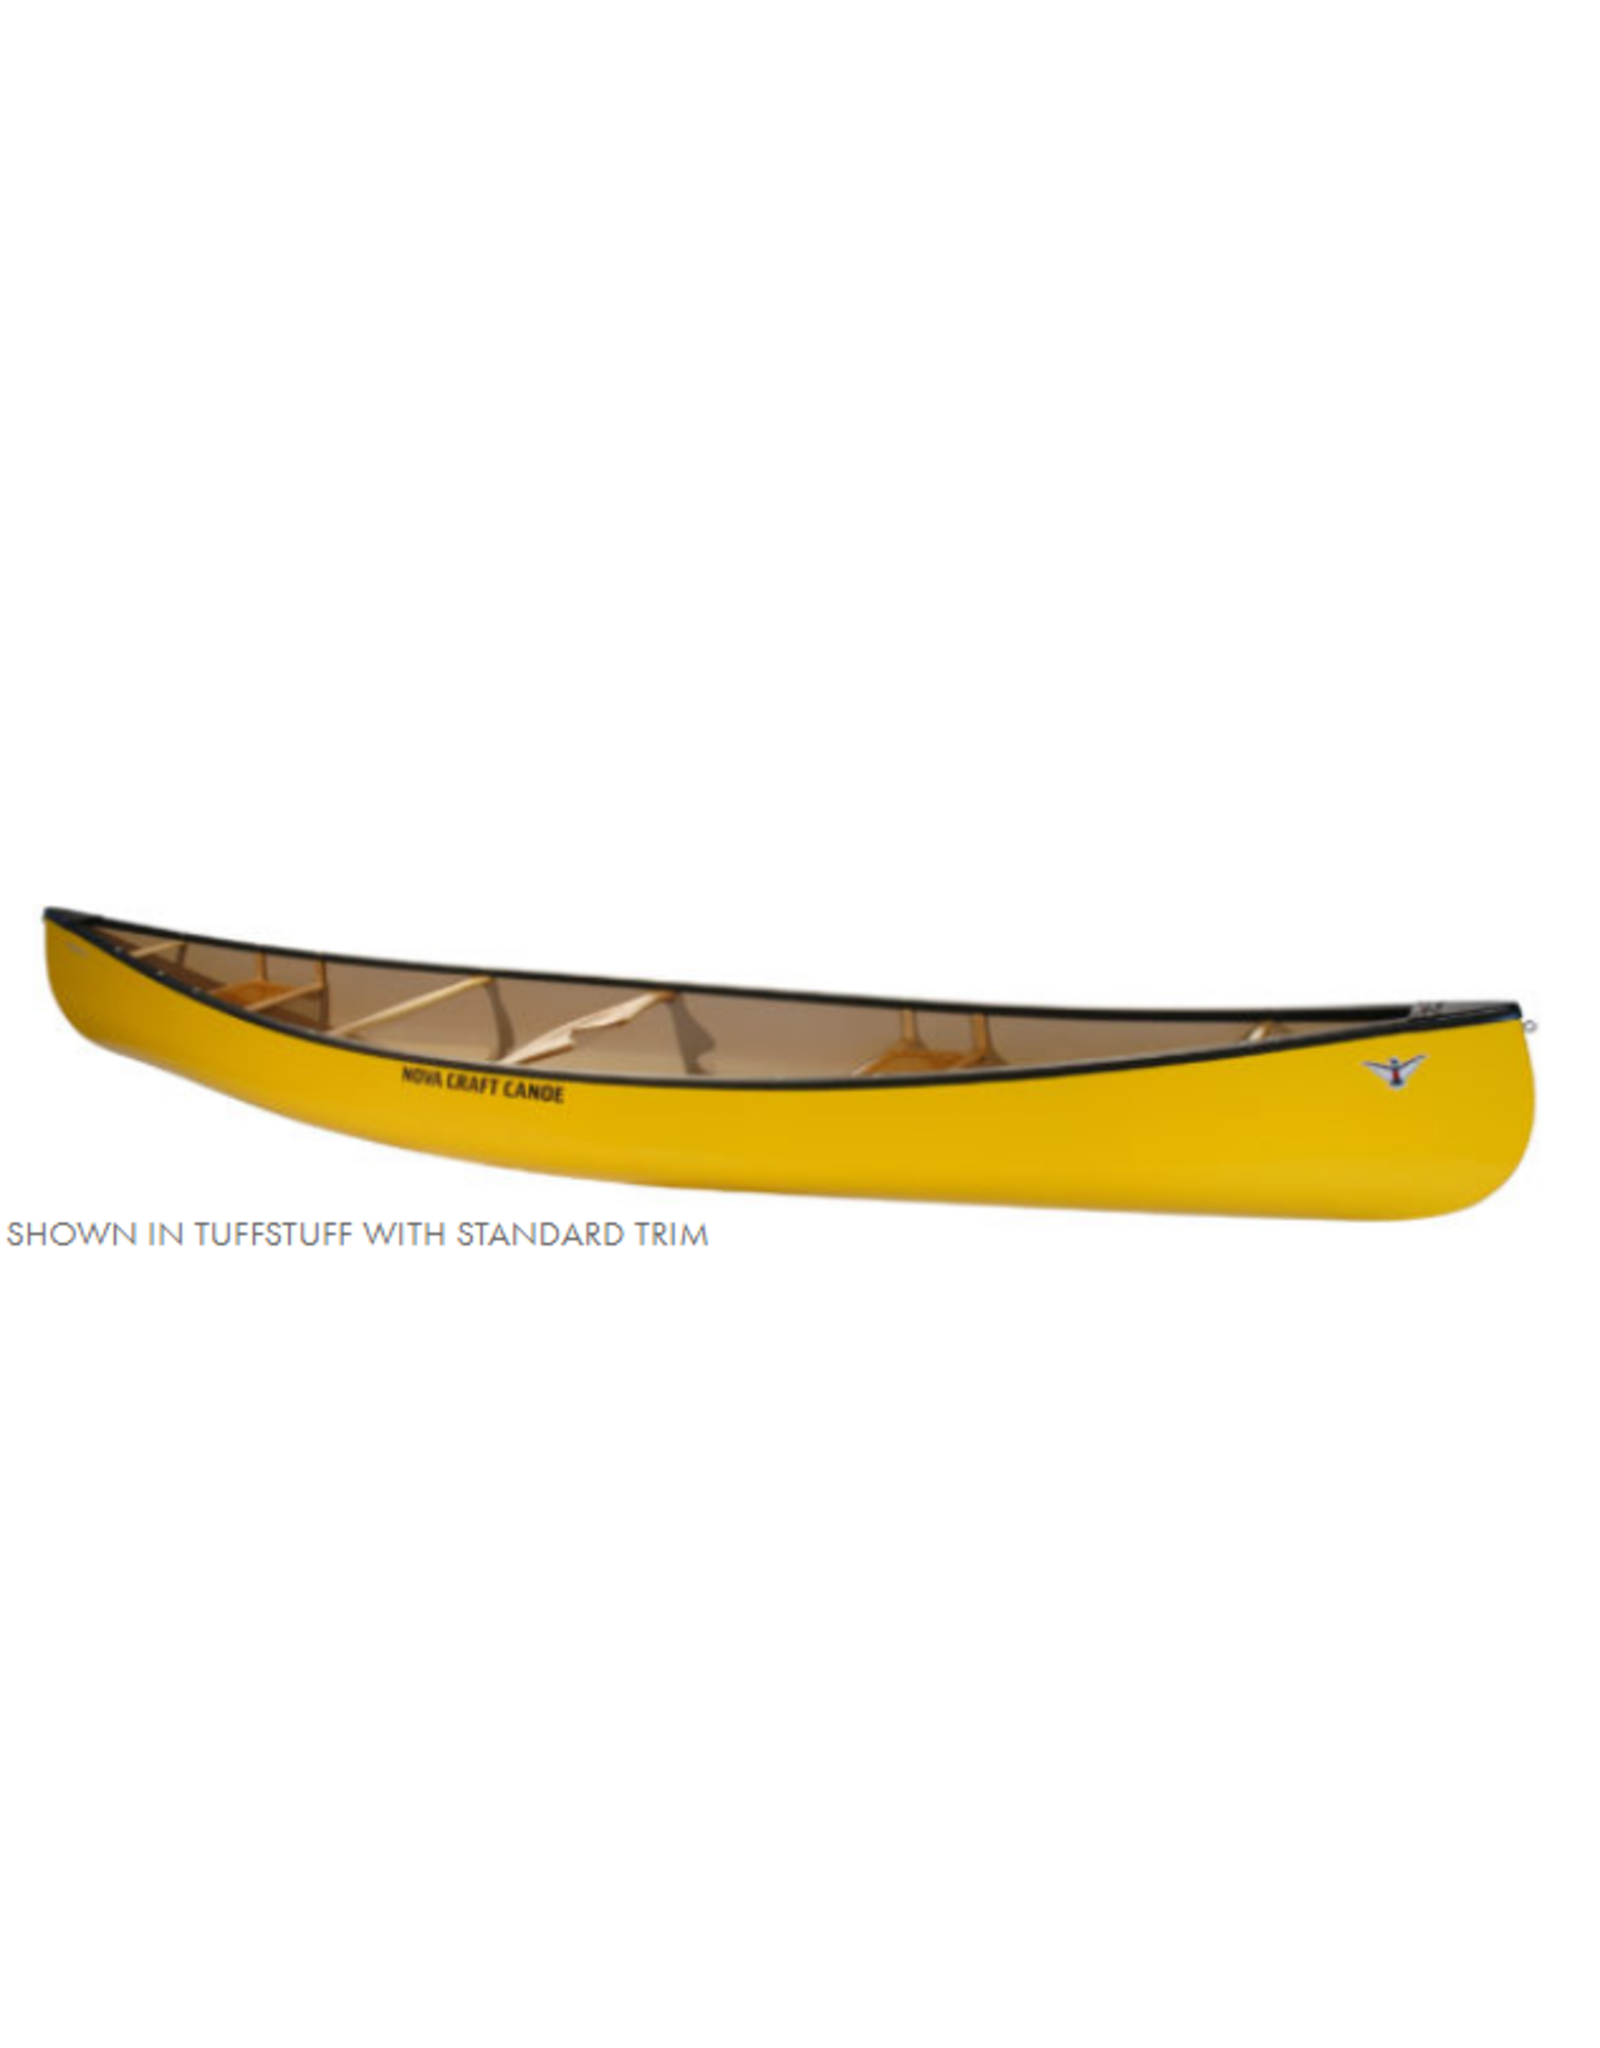 Nova Craft Nova Craft Canoe Prospecteur 16